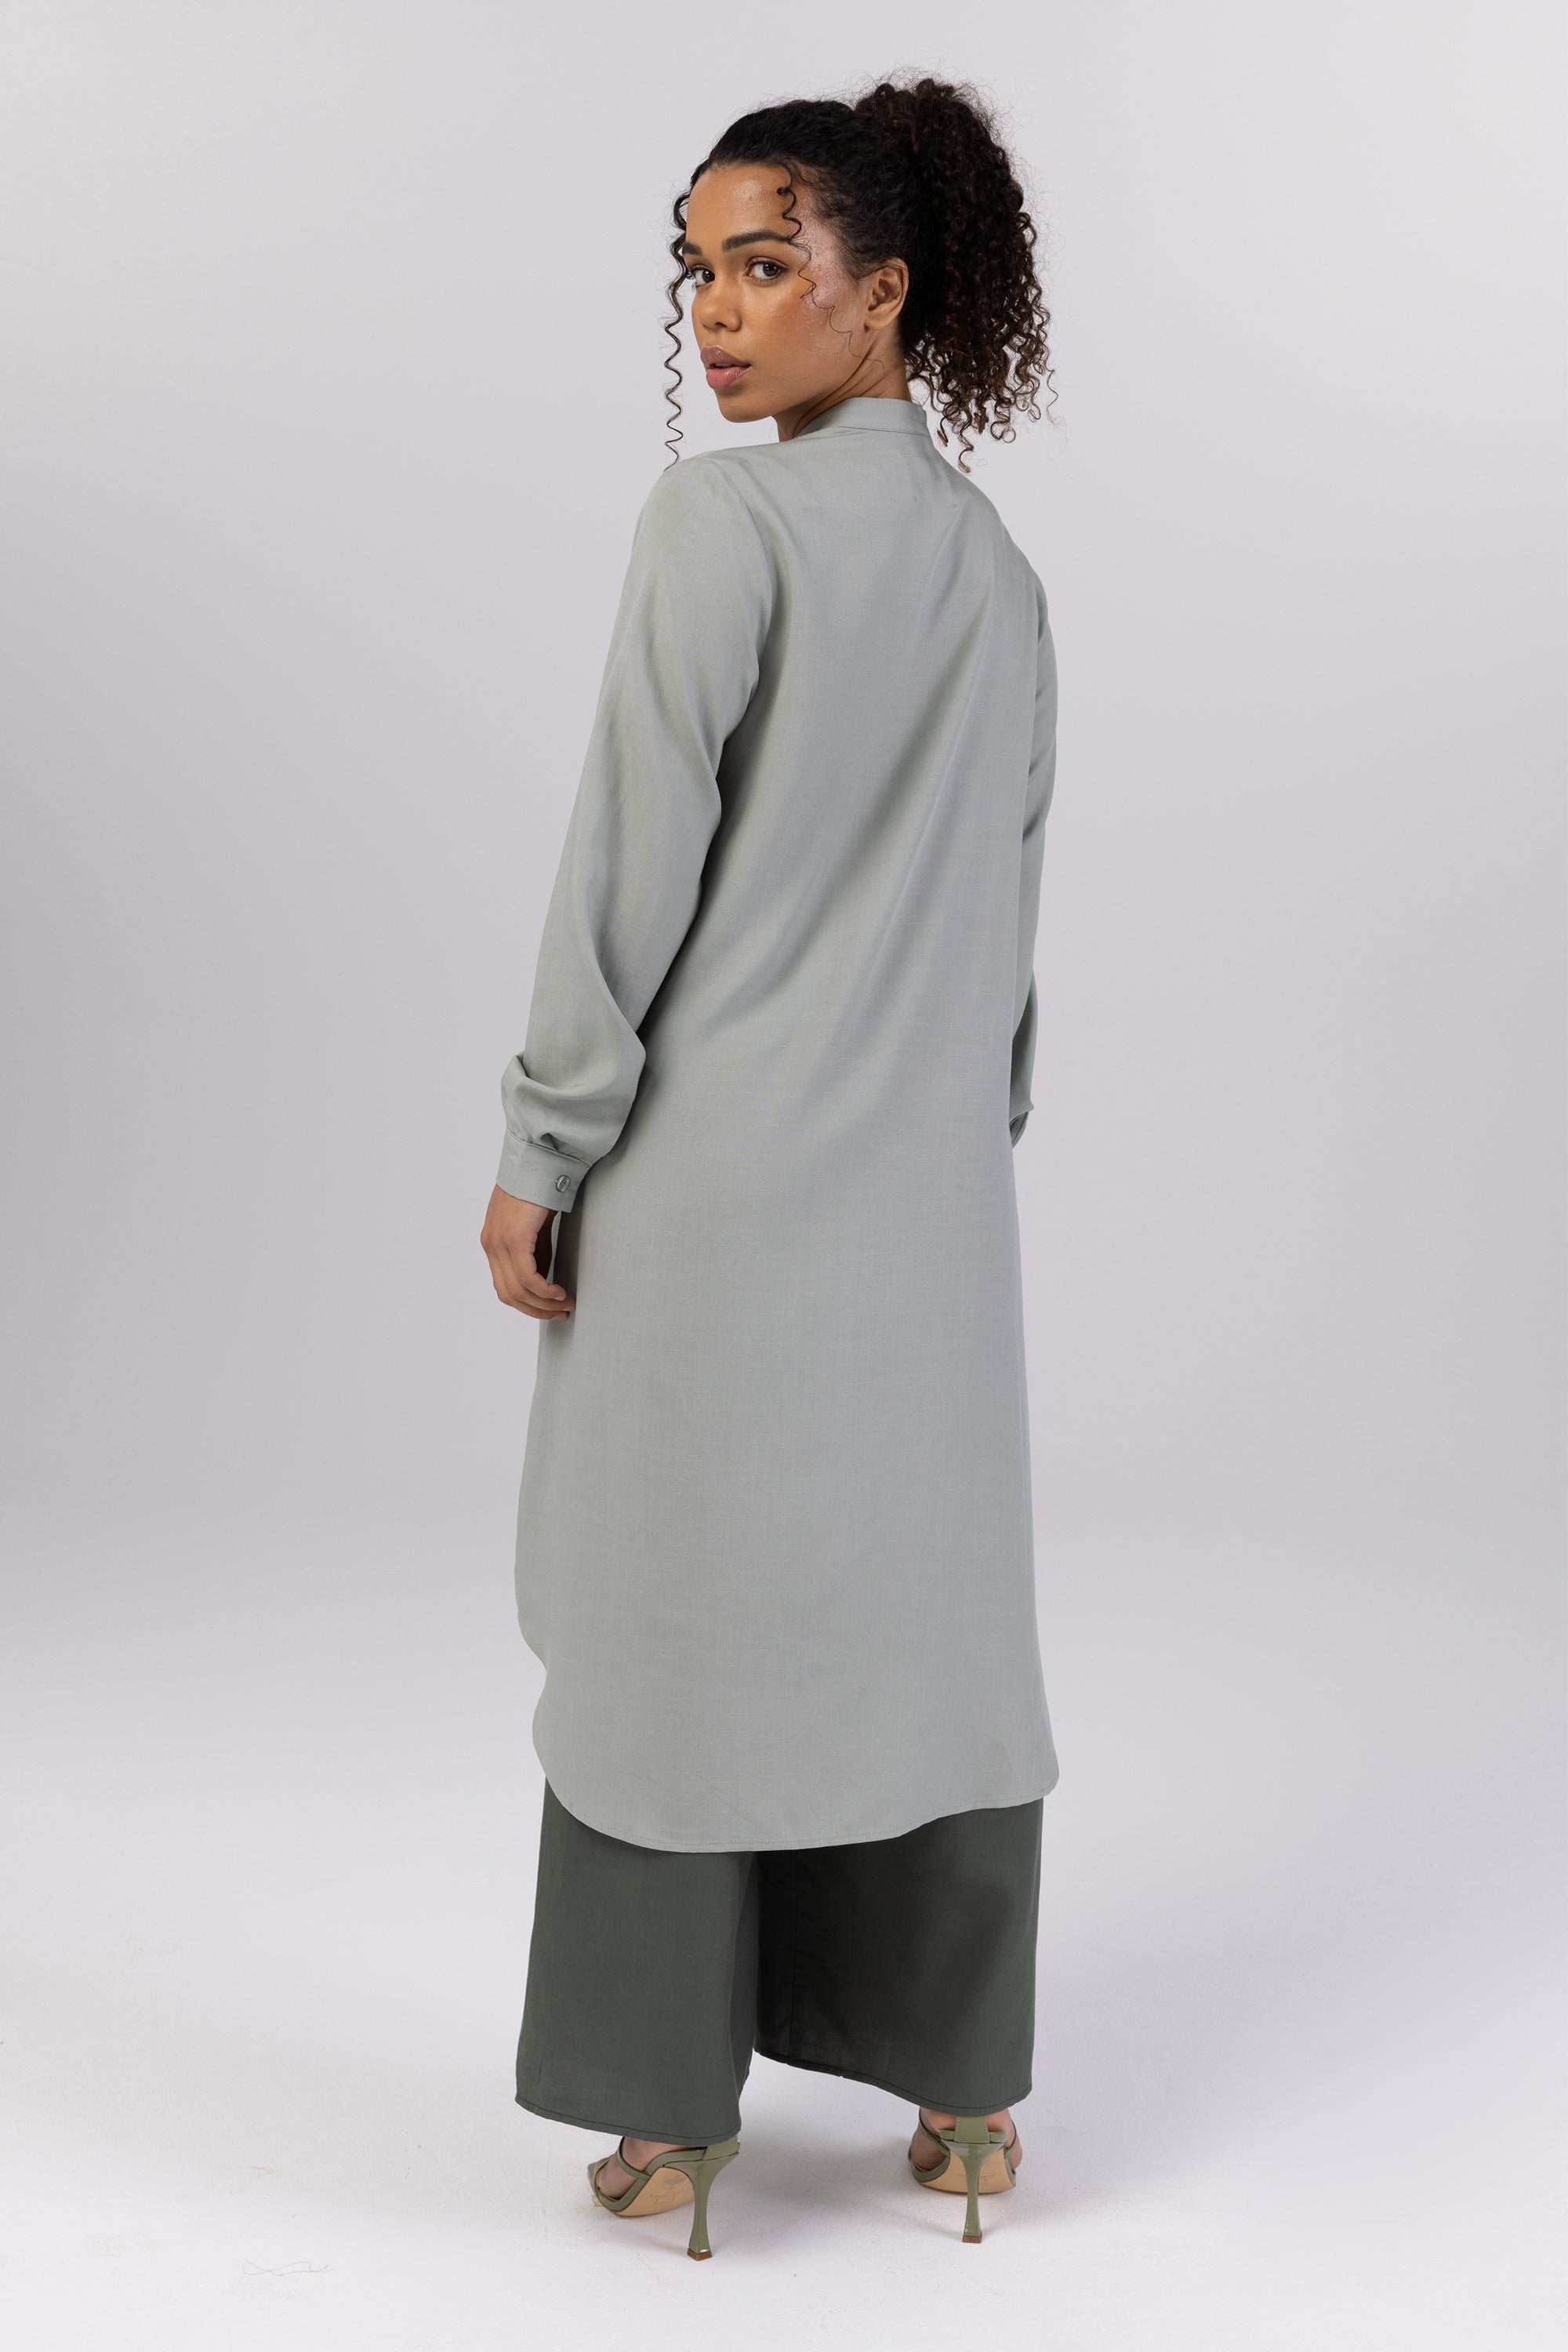 Nadine Cotton Linen Button Down Utility Tunic - Light Sage (Stillwater) Veiled Collection 